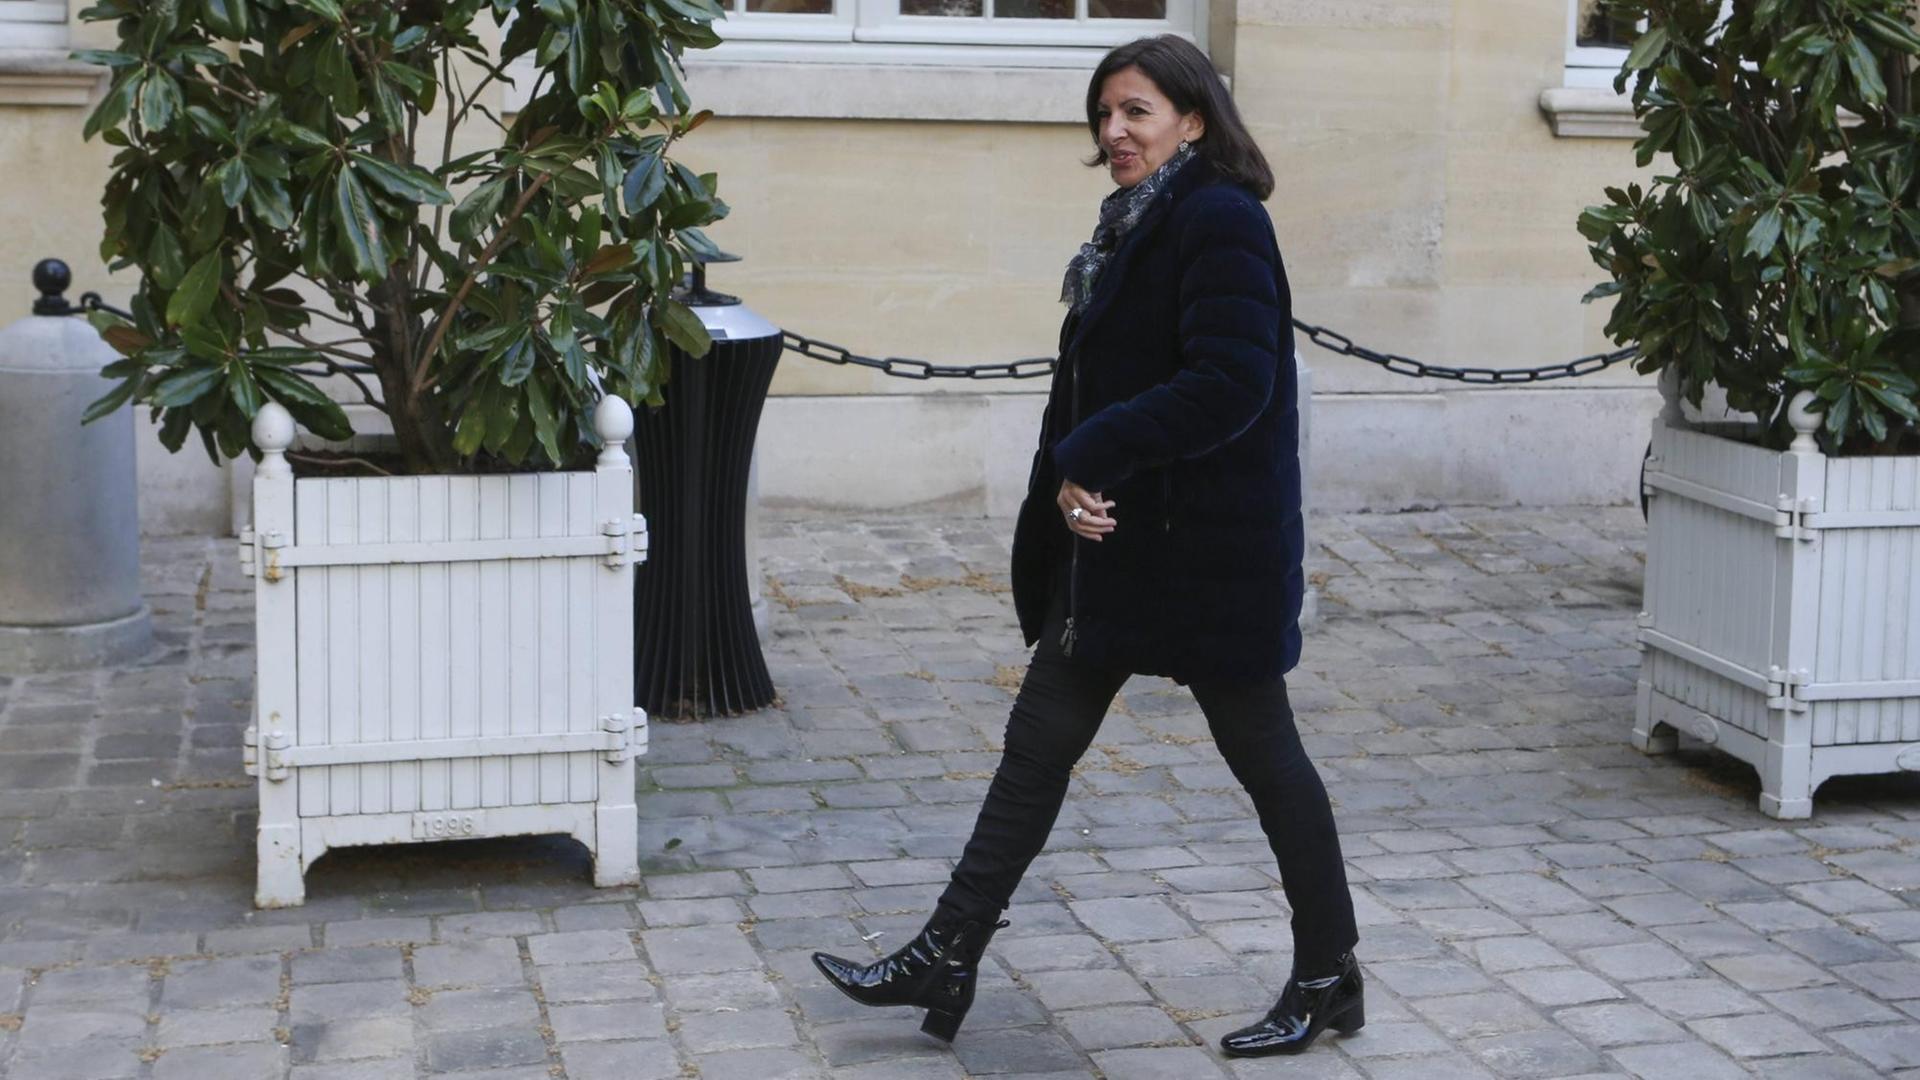 Anne Hidalgo arrivant a Matignon NEWS : Edouard Philippe recoit Anne Hidalgo - Paris - 19/03/2019 MichaelBaucher/Panoramic PUBLICATIONxNOTxINxFRAxITAxBEL